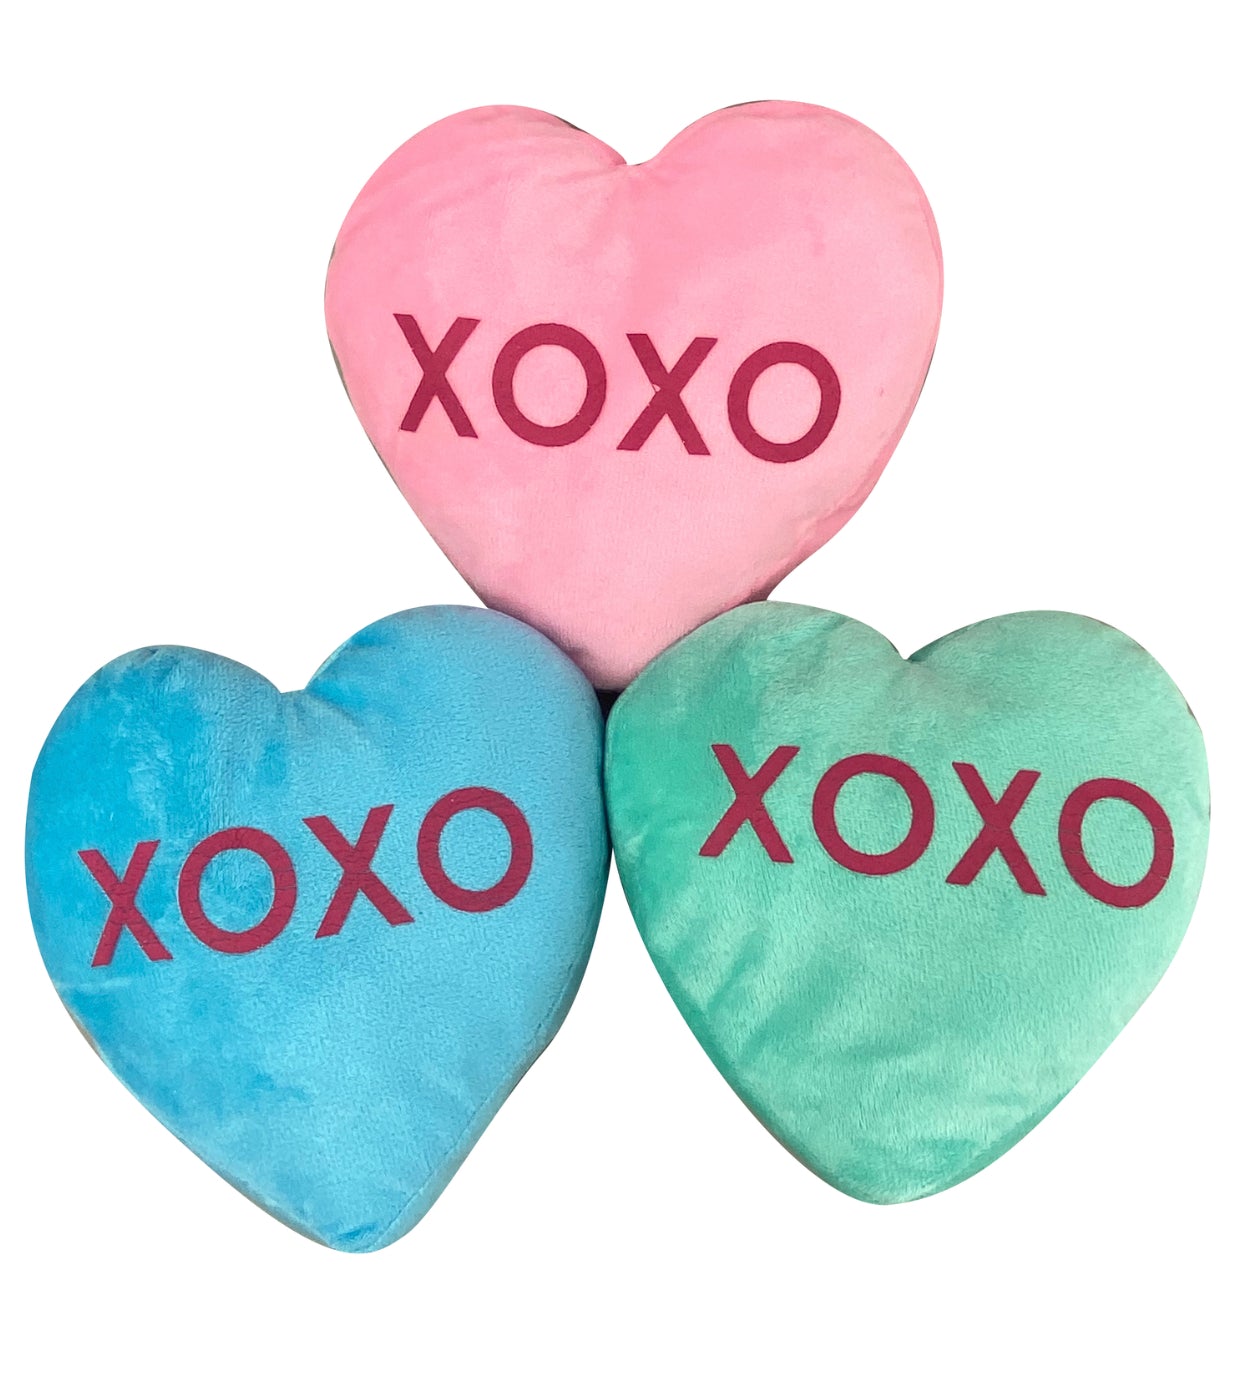 Plush conversation XOXO hearts SET of 3 large hearts - Greenery MarketSeasonal & Holiday Decorations62989asst